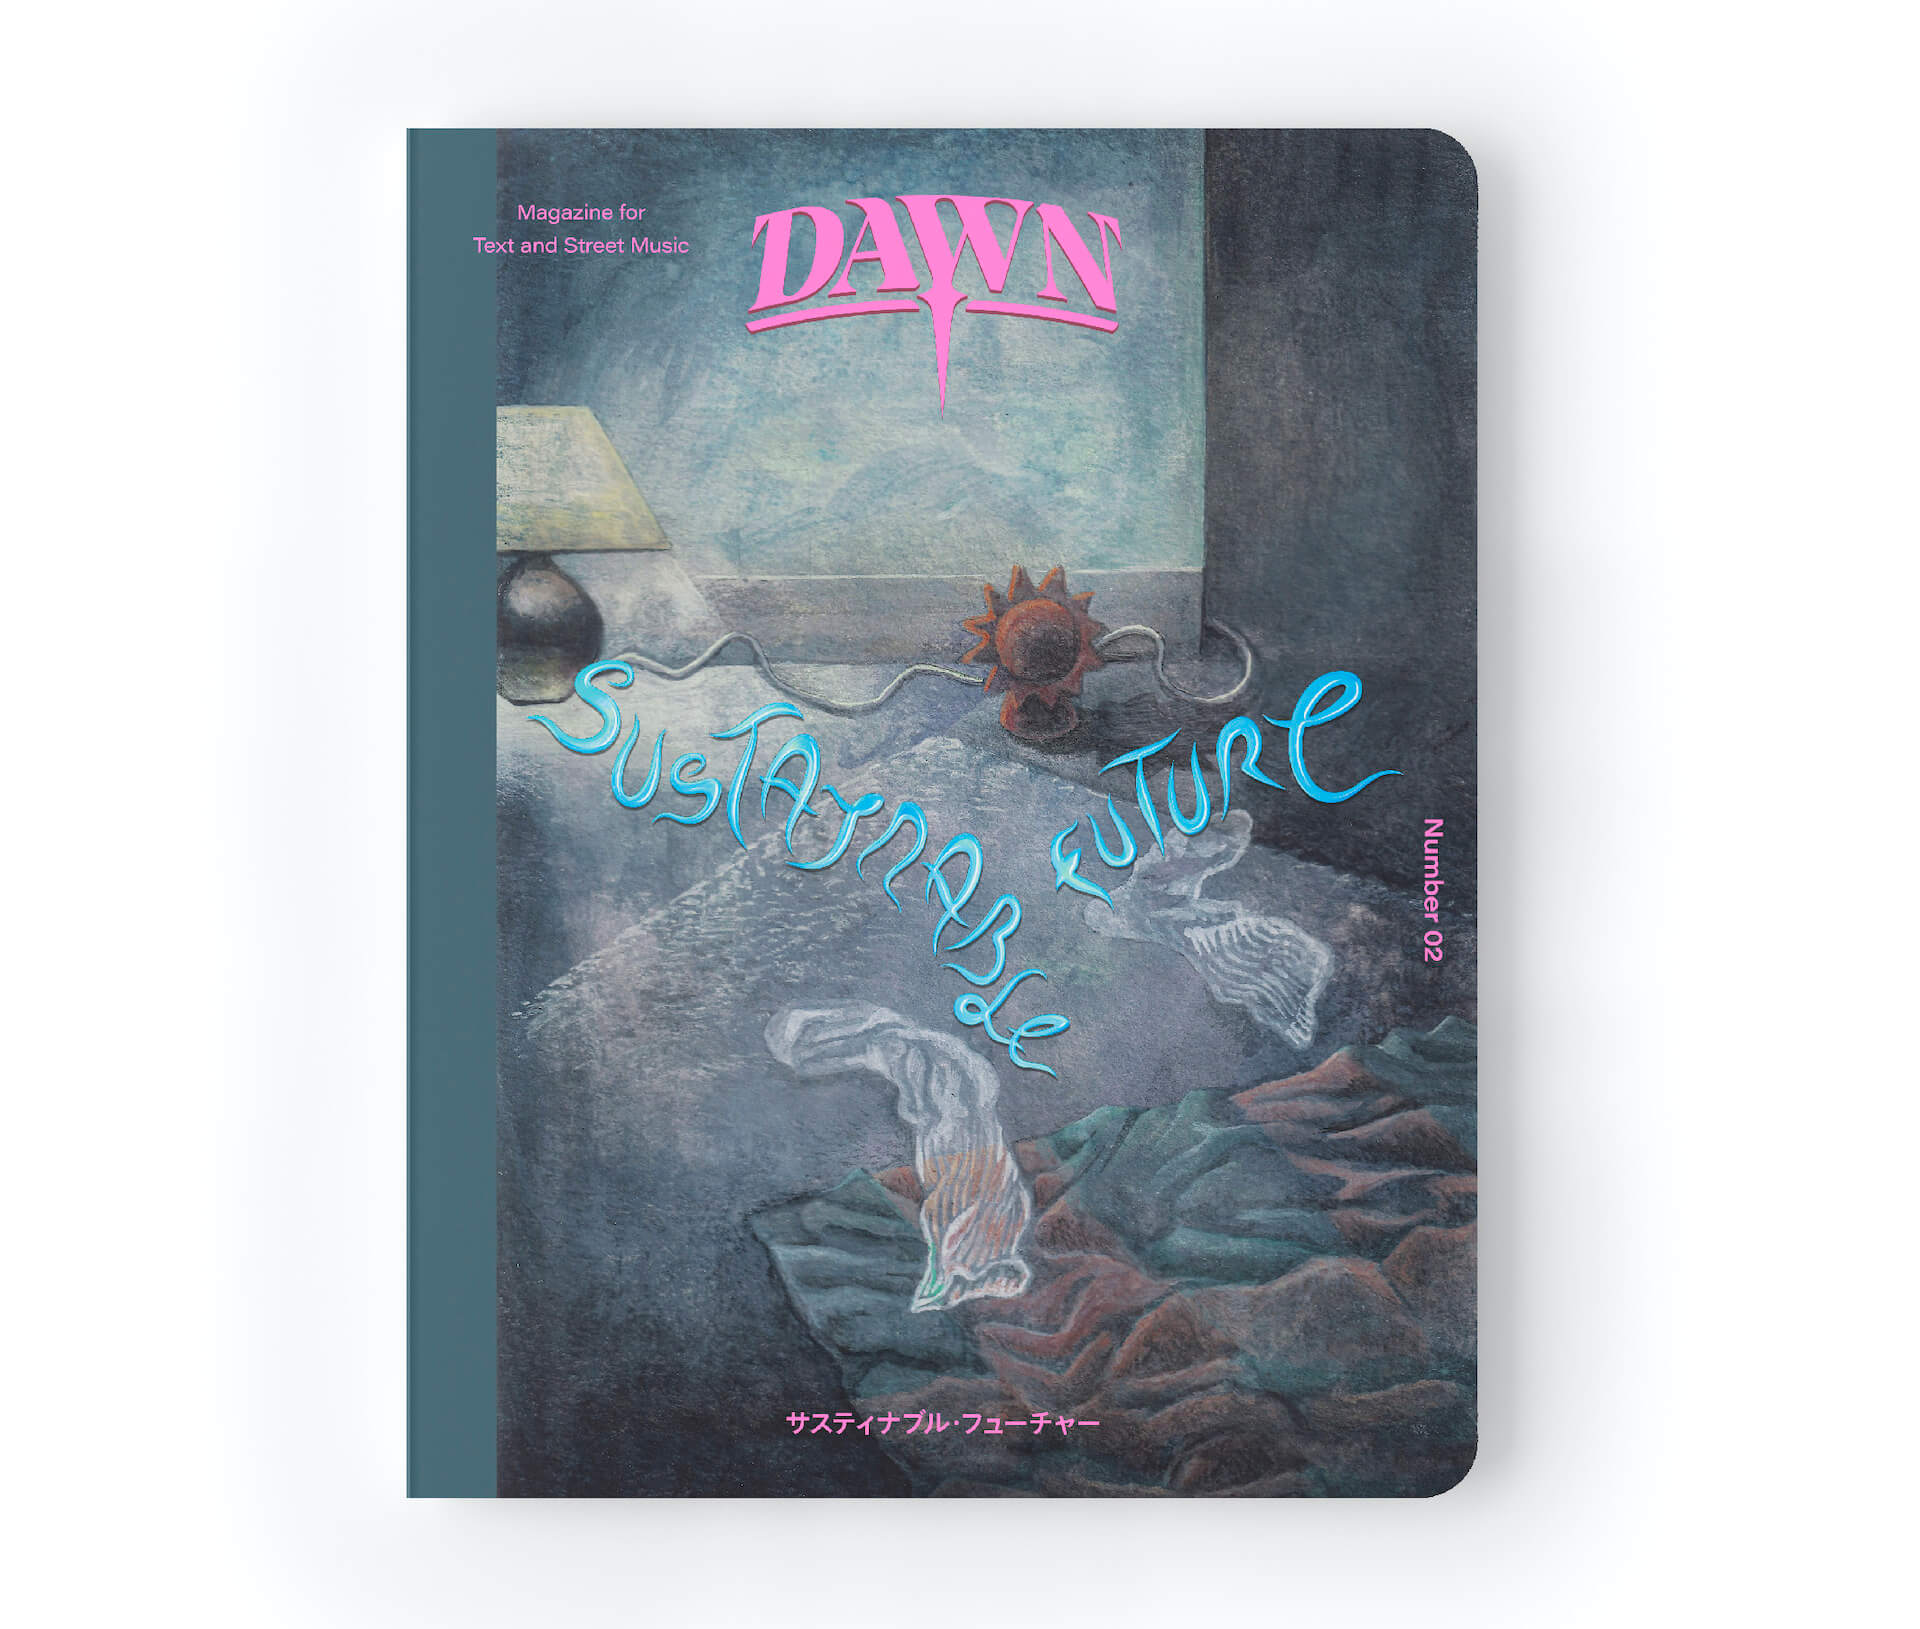 『DAWN N°2 SUSTAINABLE FUTURE』が刊行｜ゆるふわギャング、食品まつり、仙人掌らのインタビューや論評の数々からストリートを鋭角に切り取る artculture220906-dawn-n2.6